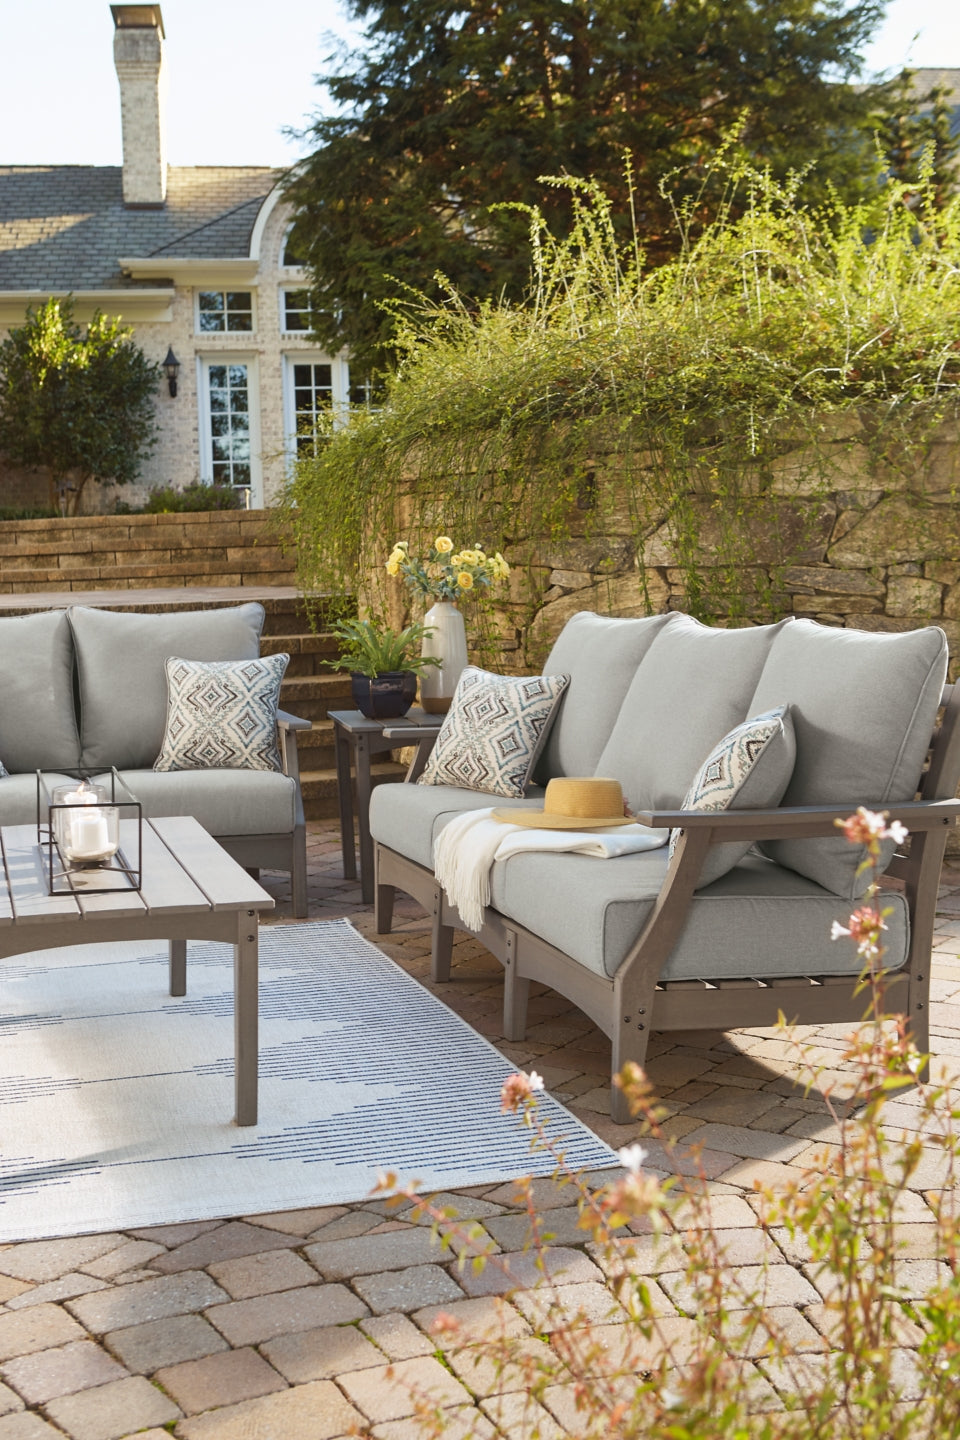 Visola Outdoor Sofa with Cushion - furniture place usa